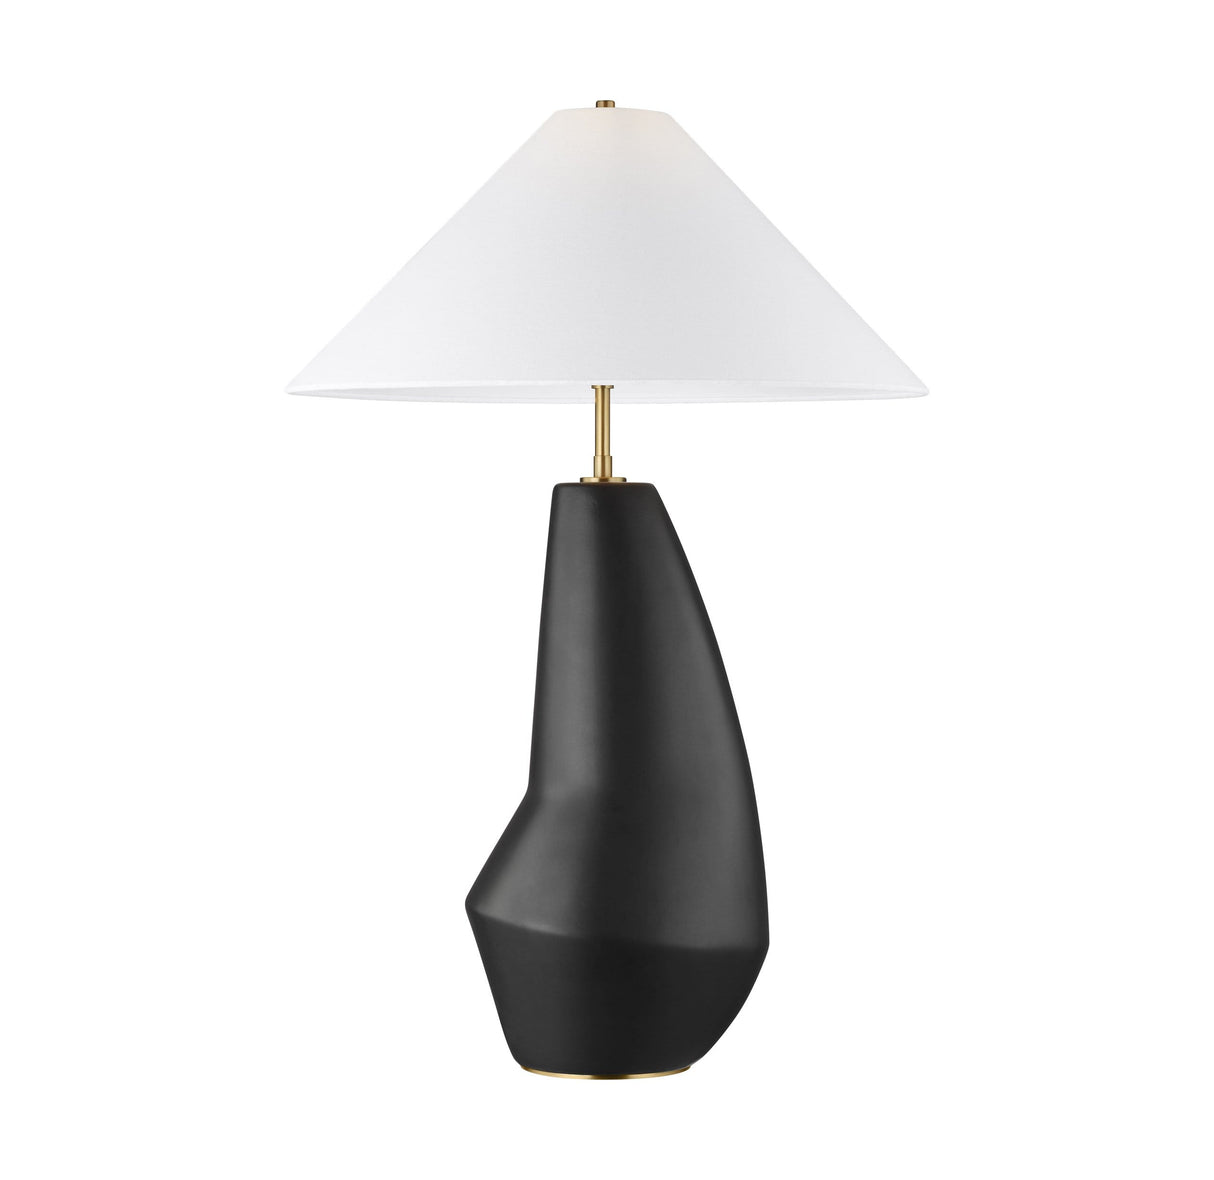 Kelly Wearstler Contour Tall Table Lamp - Coal Lighting kelly-wearstler-KT1231COL1